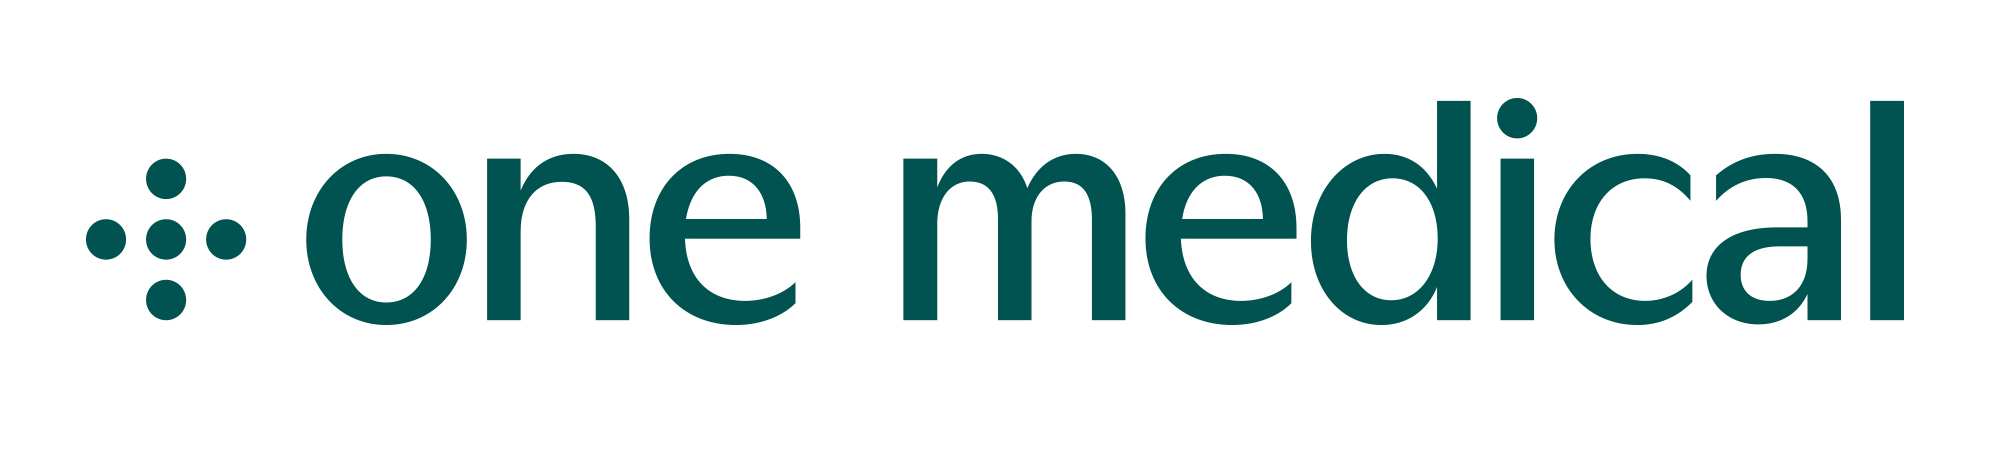 one_medical_logo.png